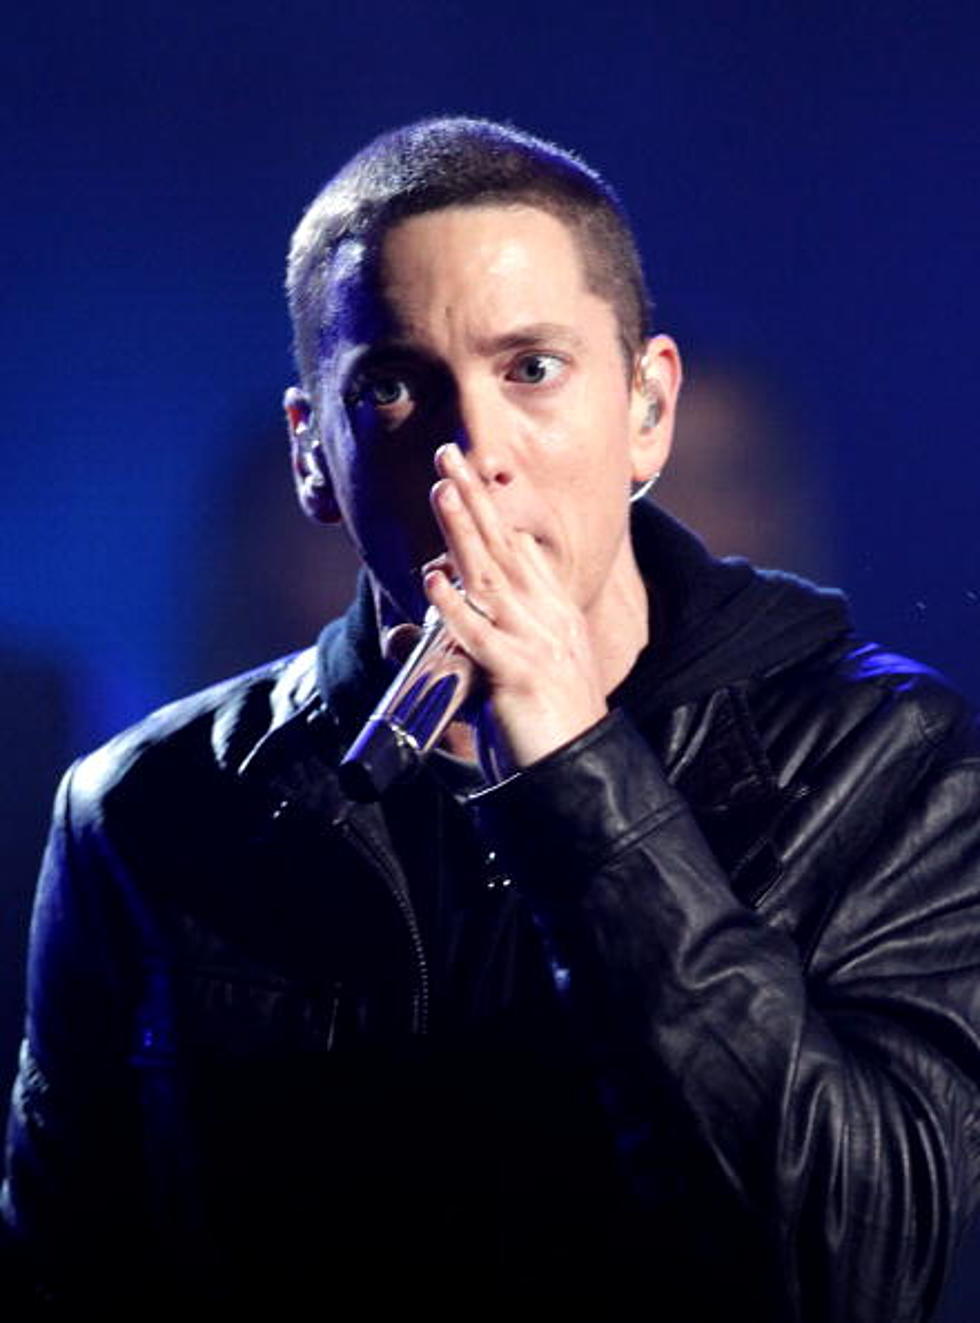 Eminem Passes 1 Million Digital Downloads